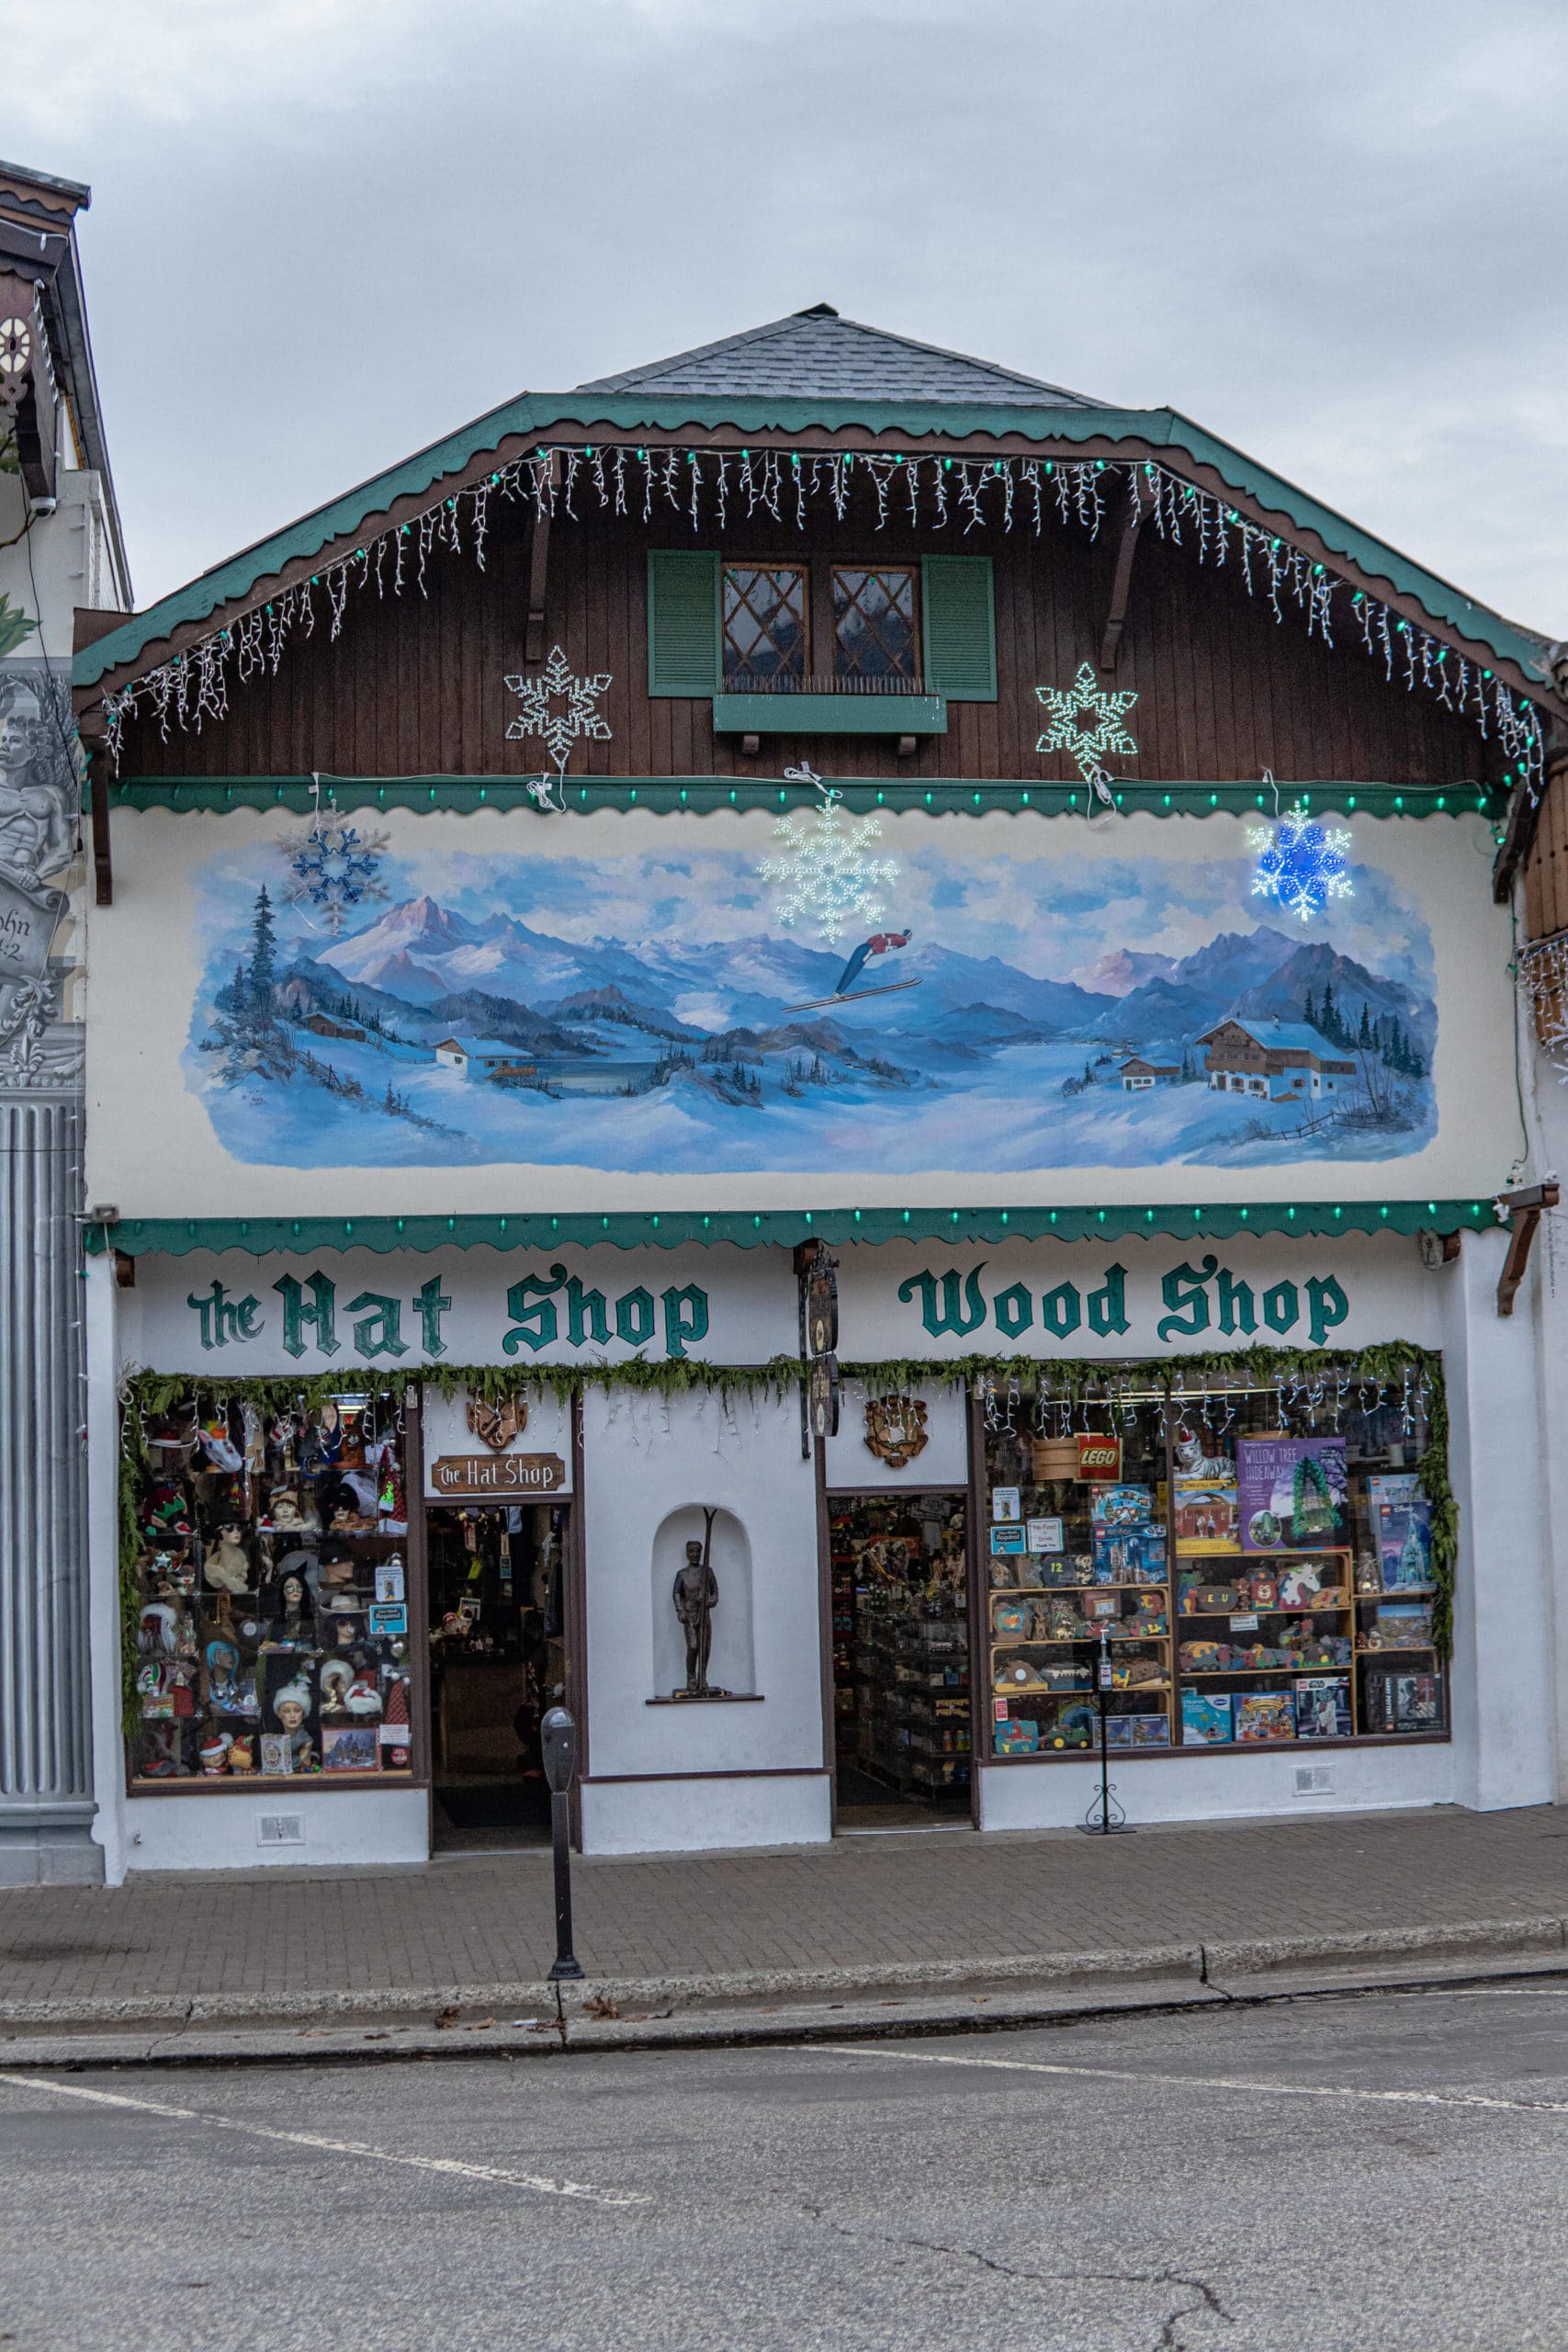 The Wood Shop